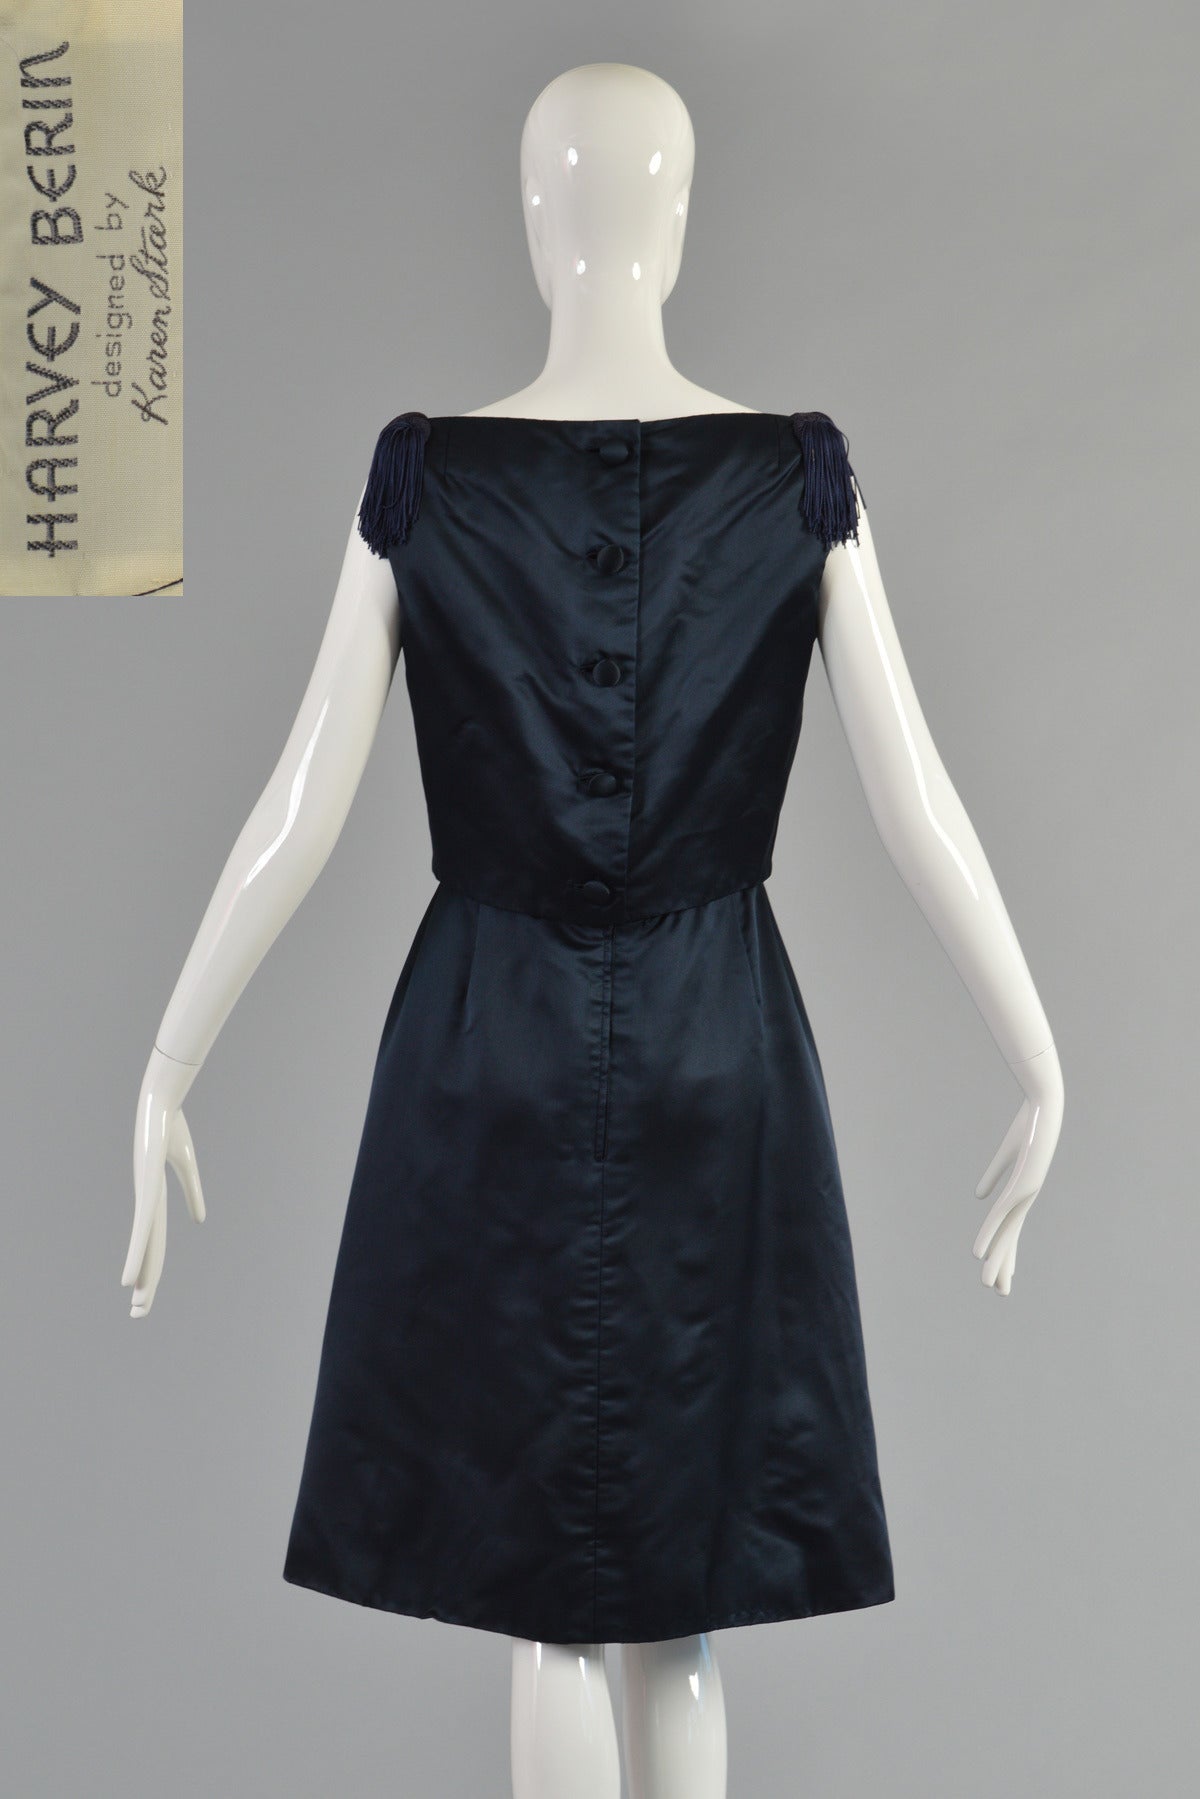 Karen Stark for Harvey Berin Silk Cocktail Dress with Tassel Fringe Shoulders For Sale 5